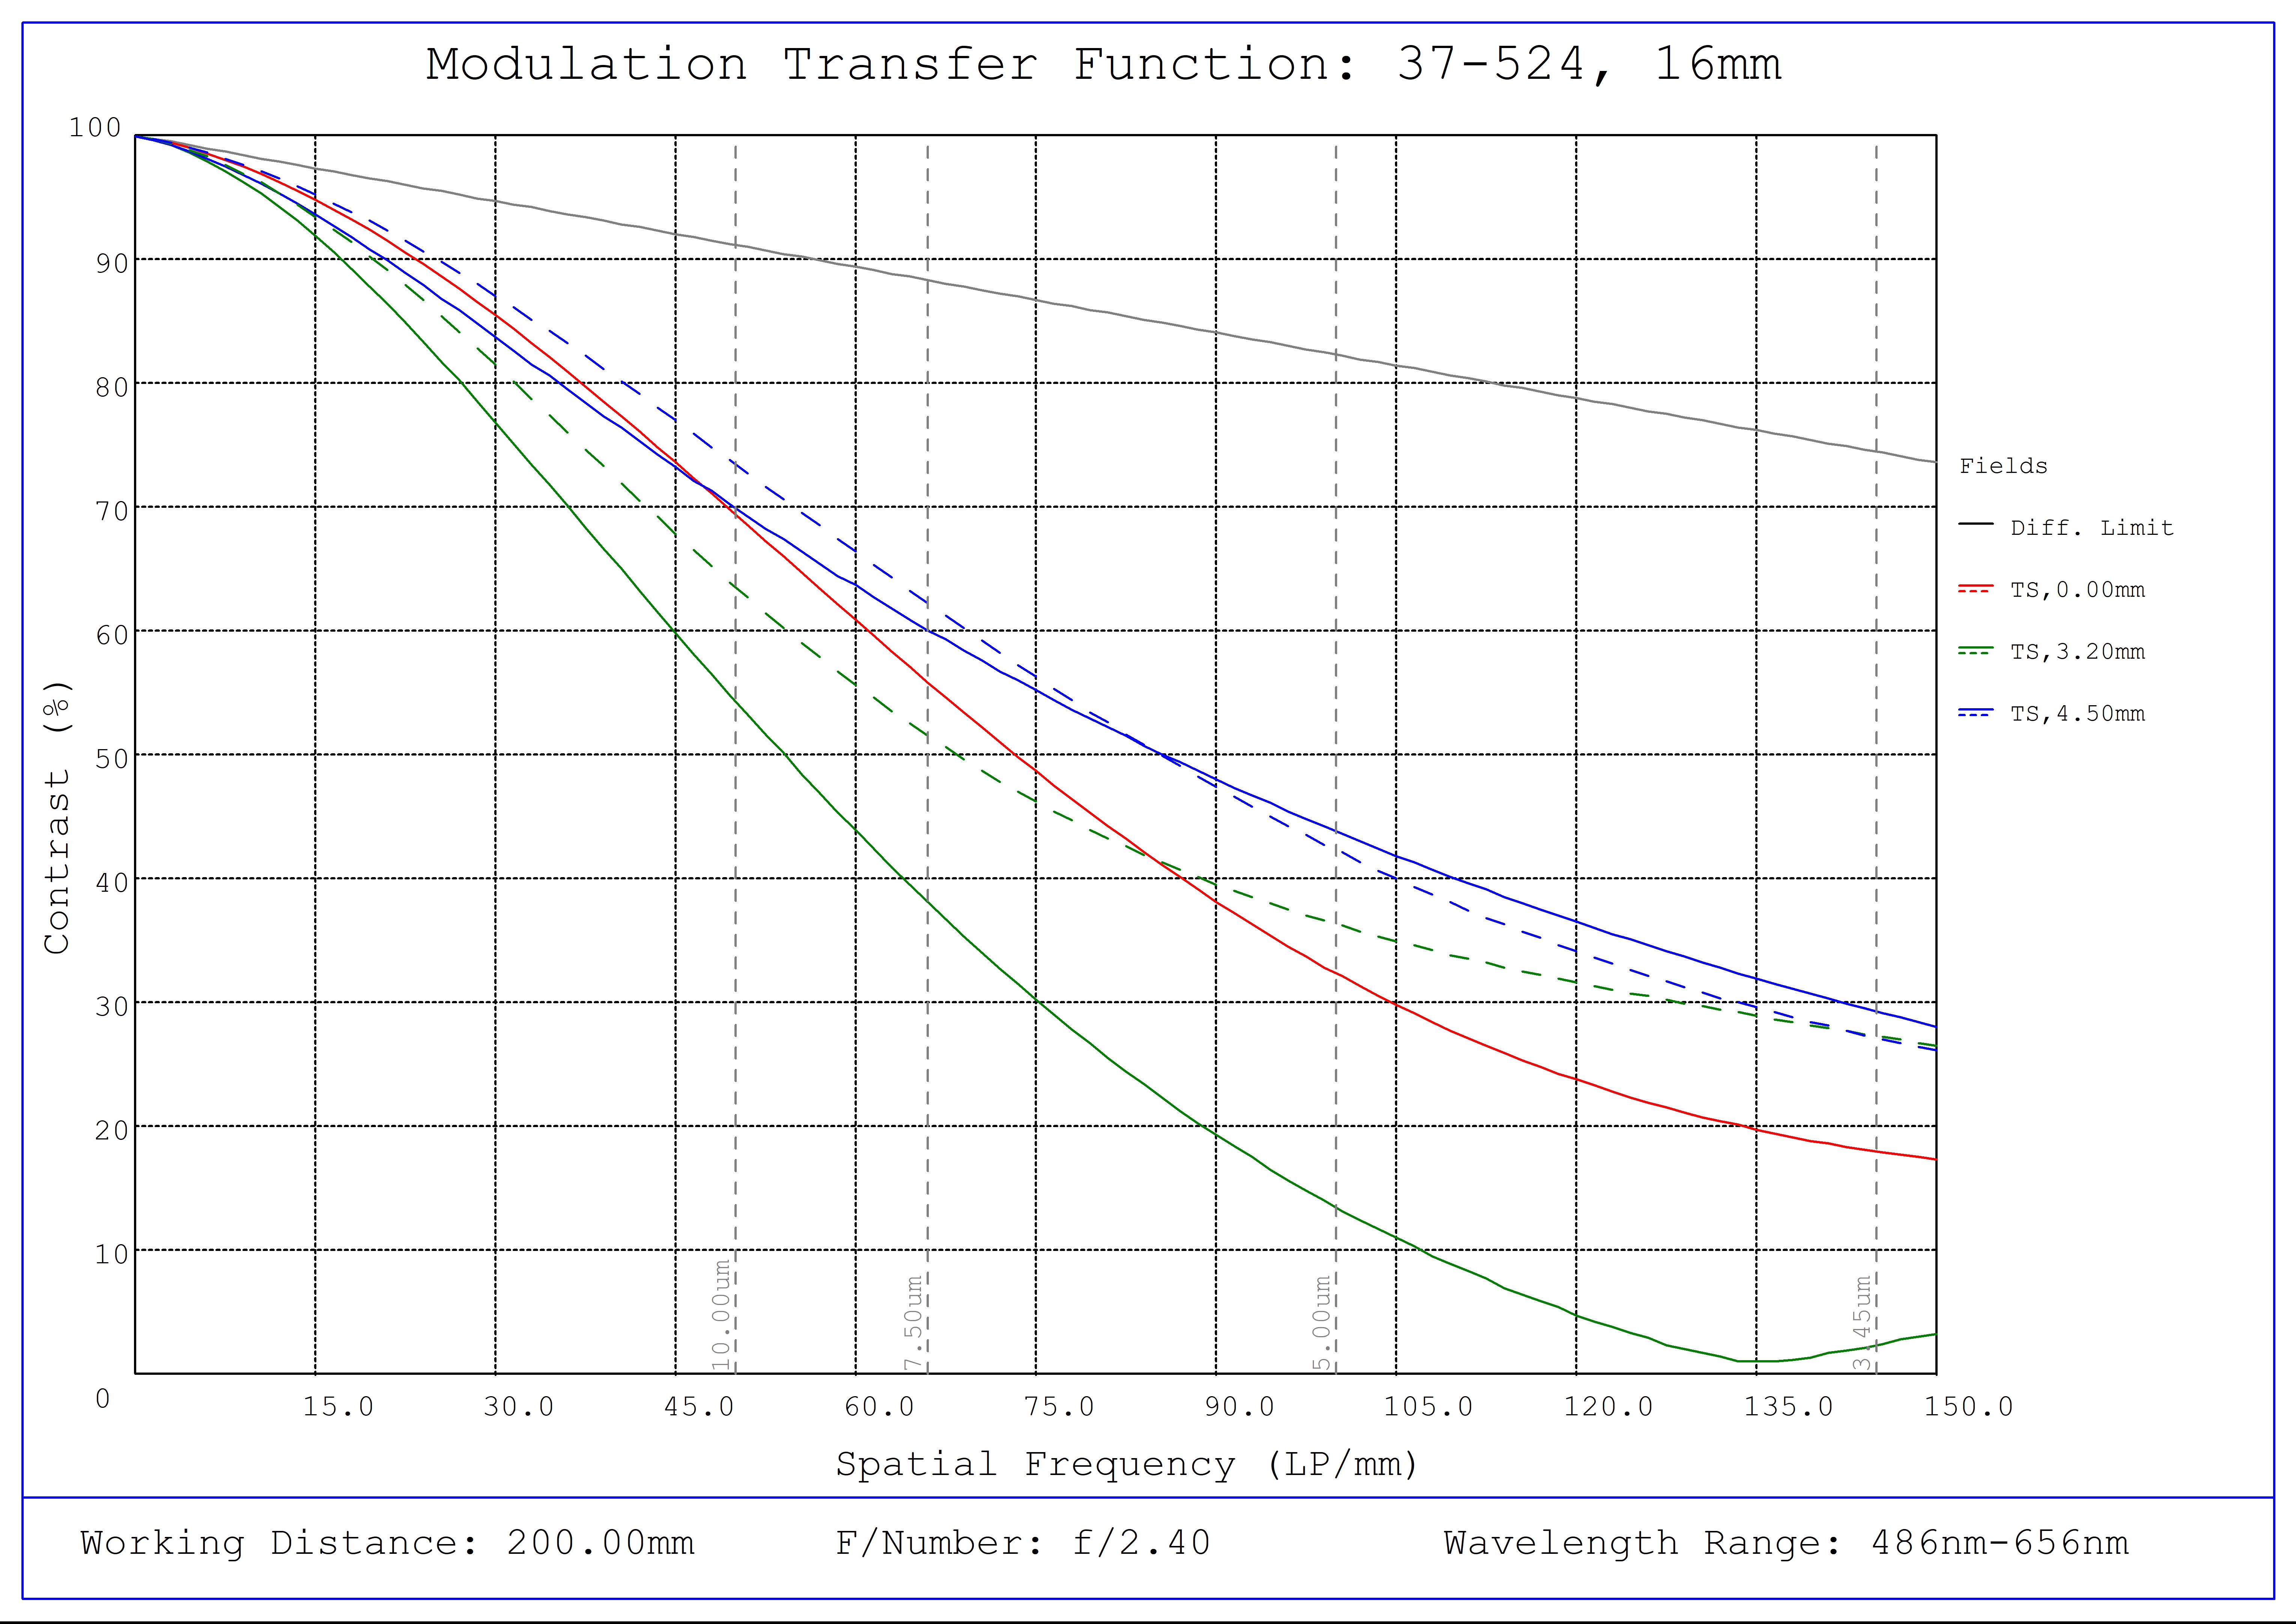 #37-524, 16mm FL, Liquid Lens M12 Lens, Modulated Transfer Function (MTF) Plot, 200mm Working Distance, f2.4